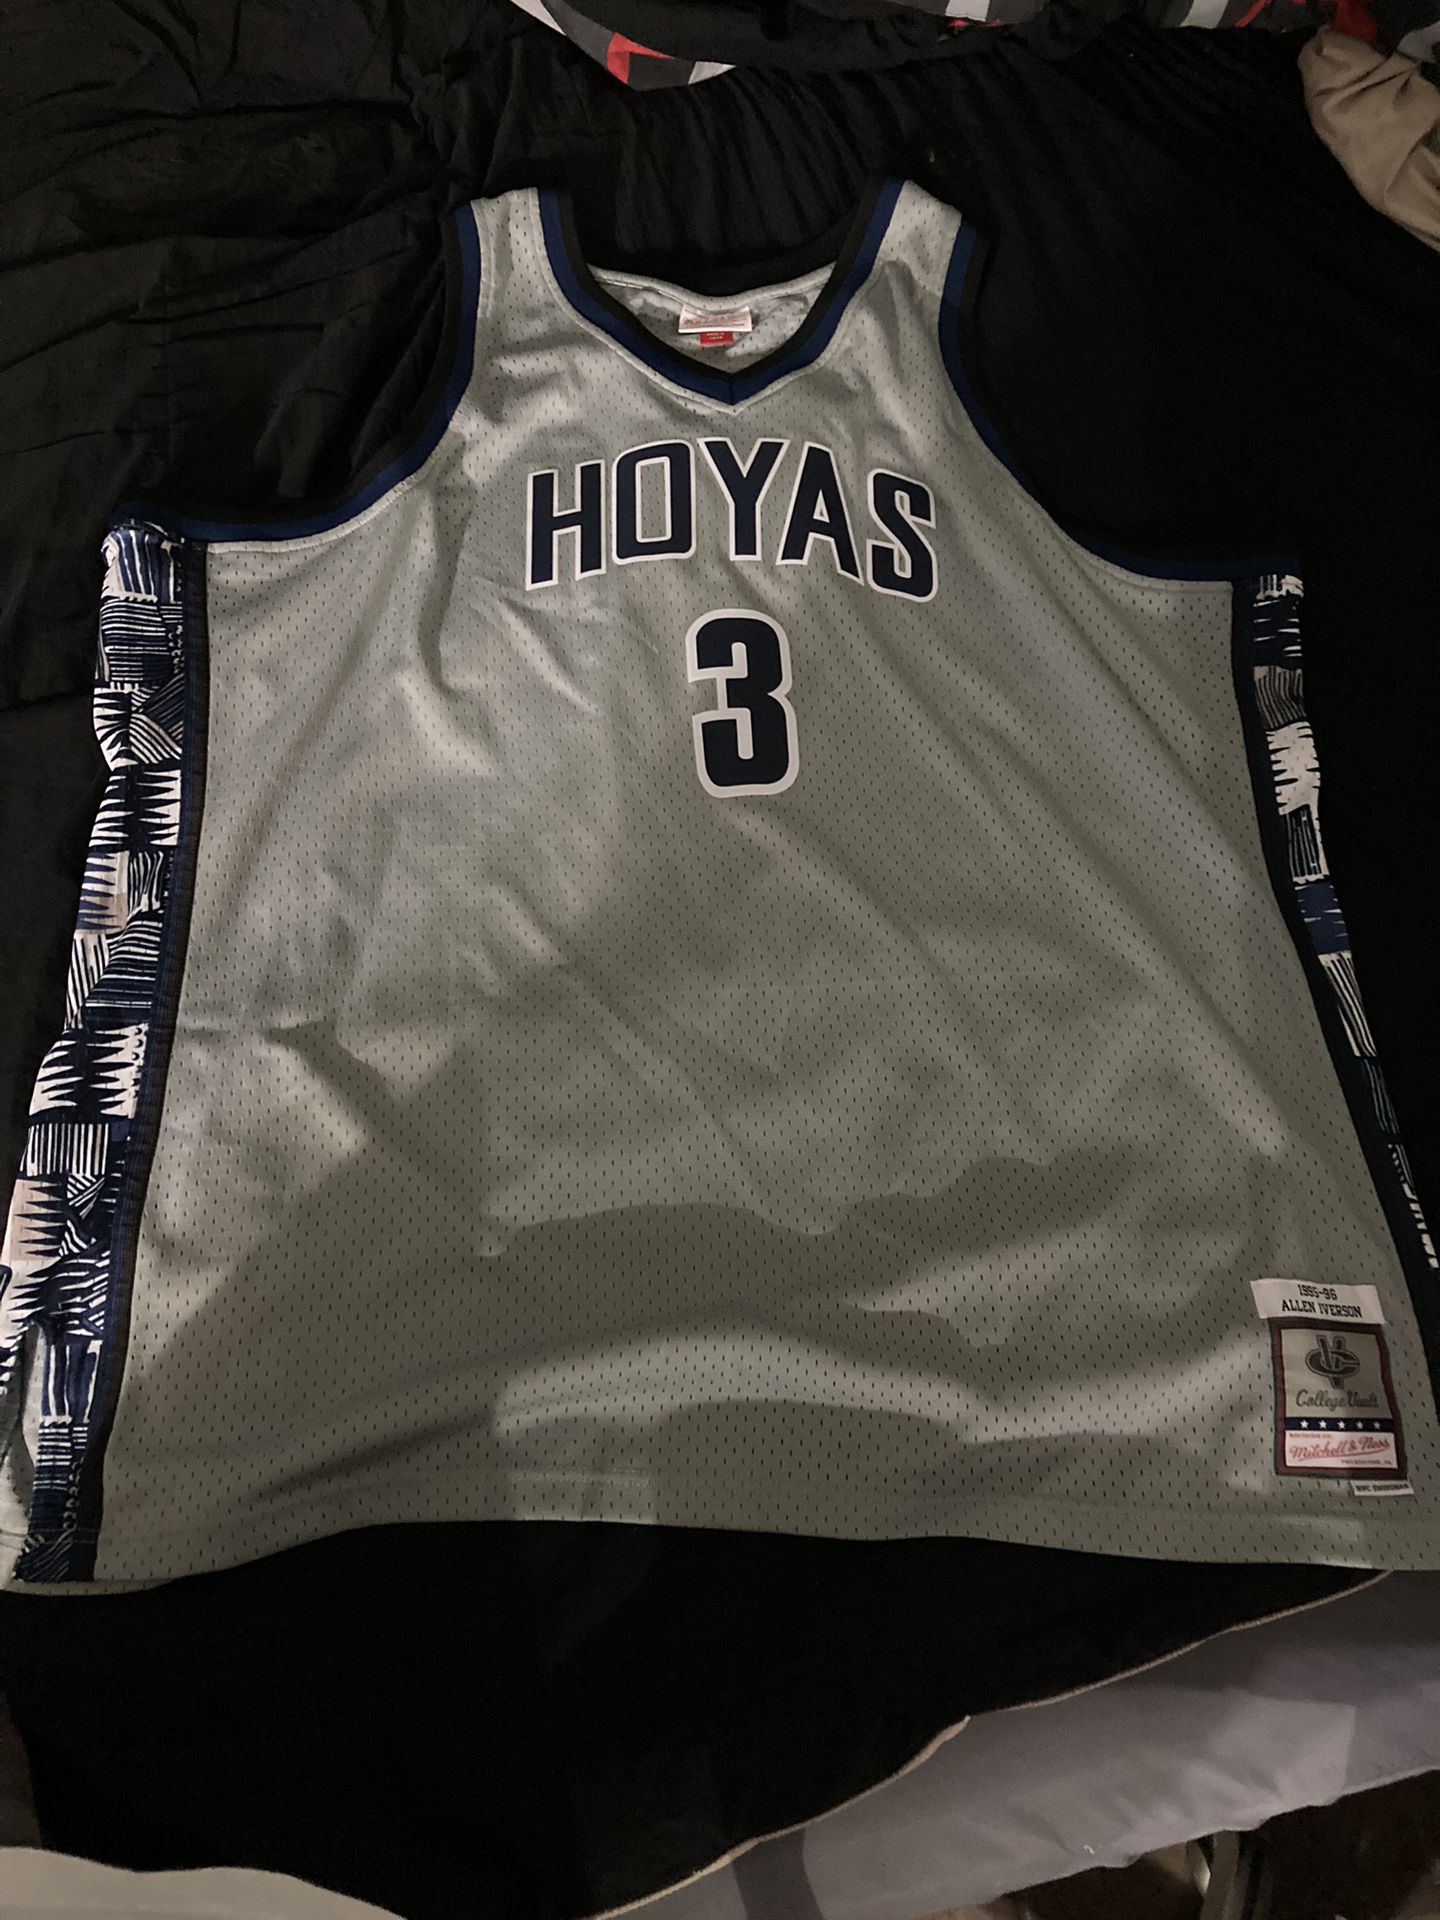 Mitchell & Ness Jersey Size XL Georgetown Hoyas NCAA Allen